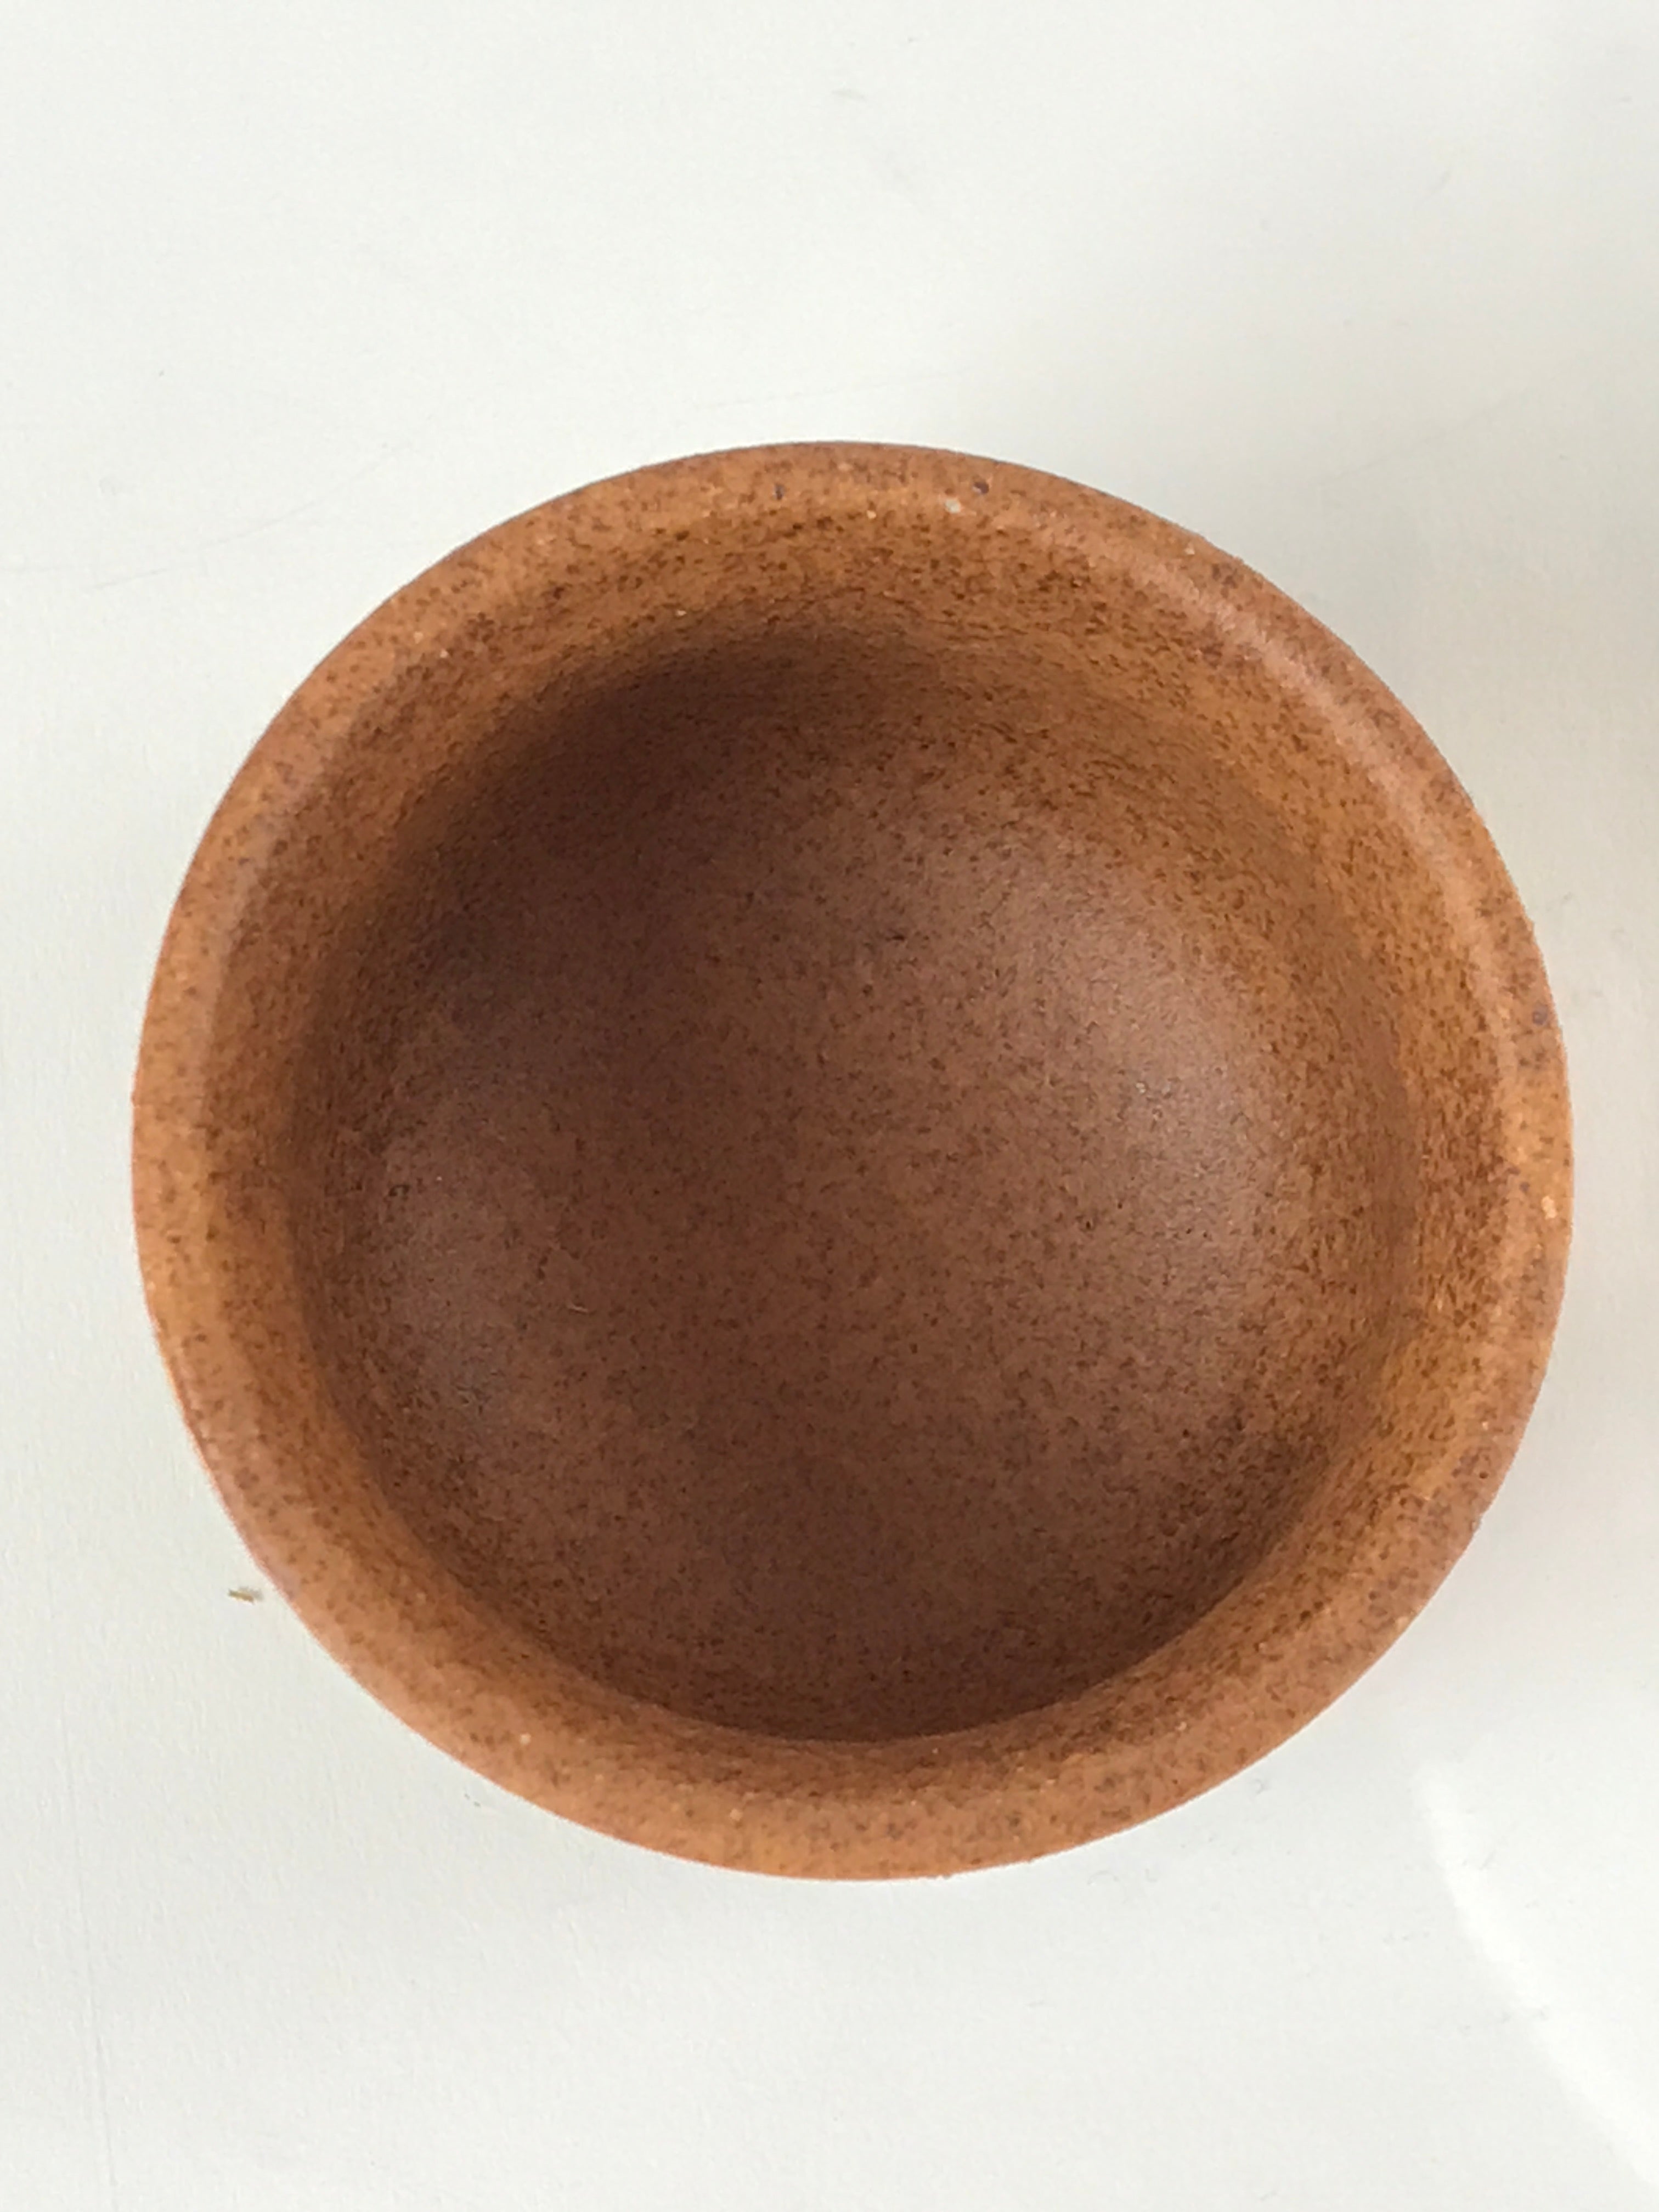 Japanese Ceramic Sake Cup Vtg Tsubomi Guinomi Brown Green Glaze Design G159